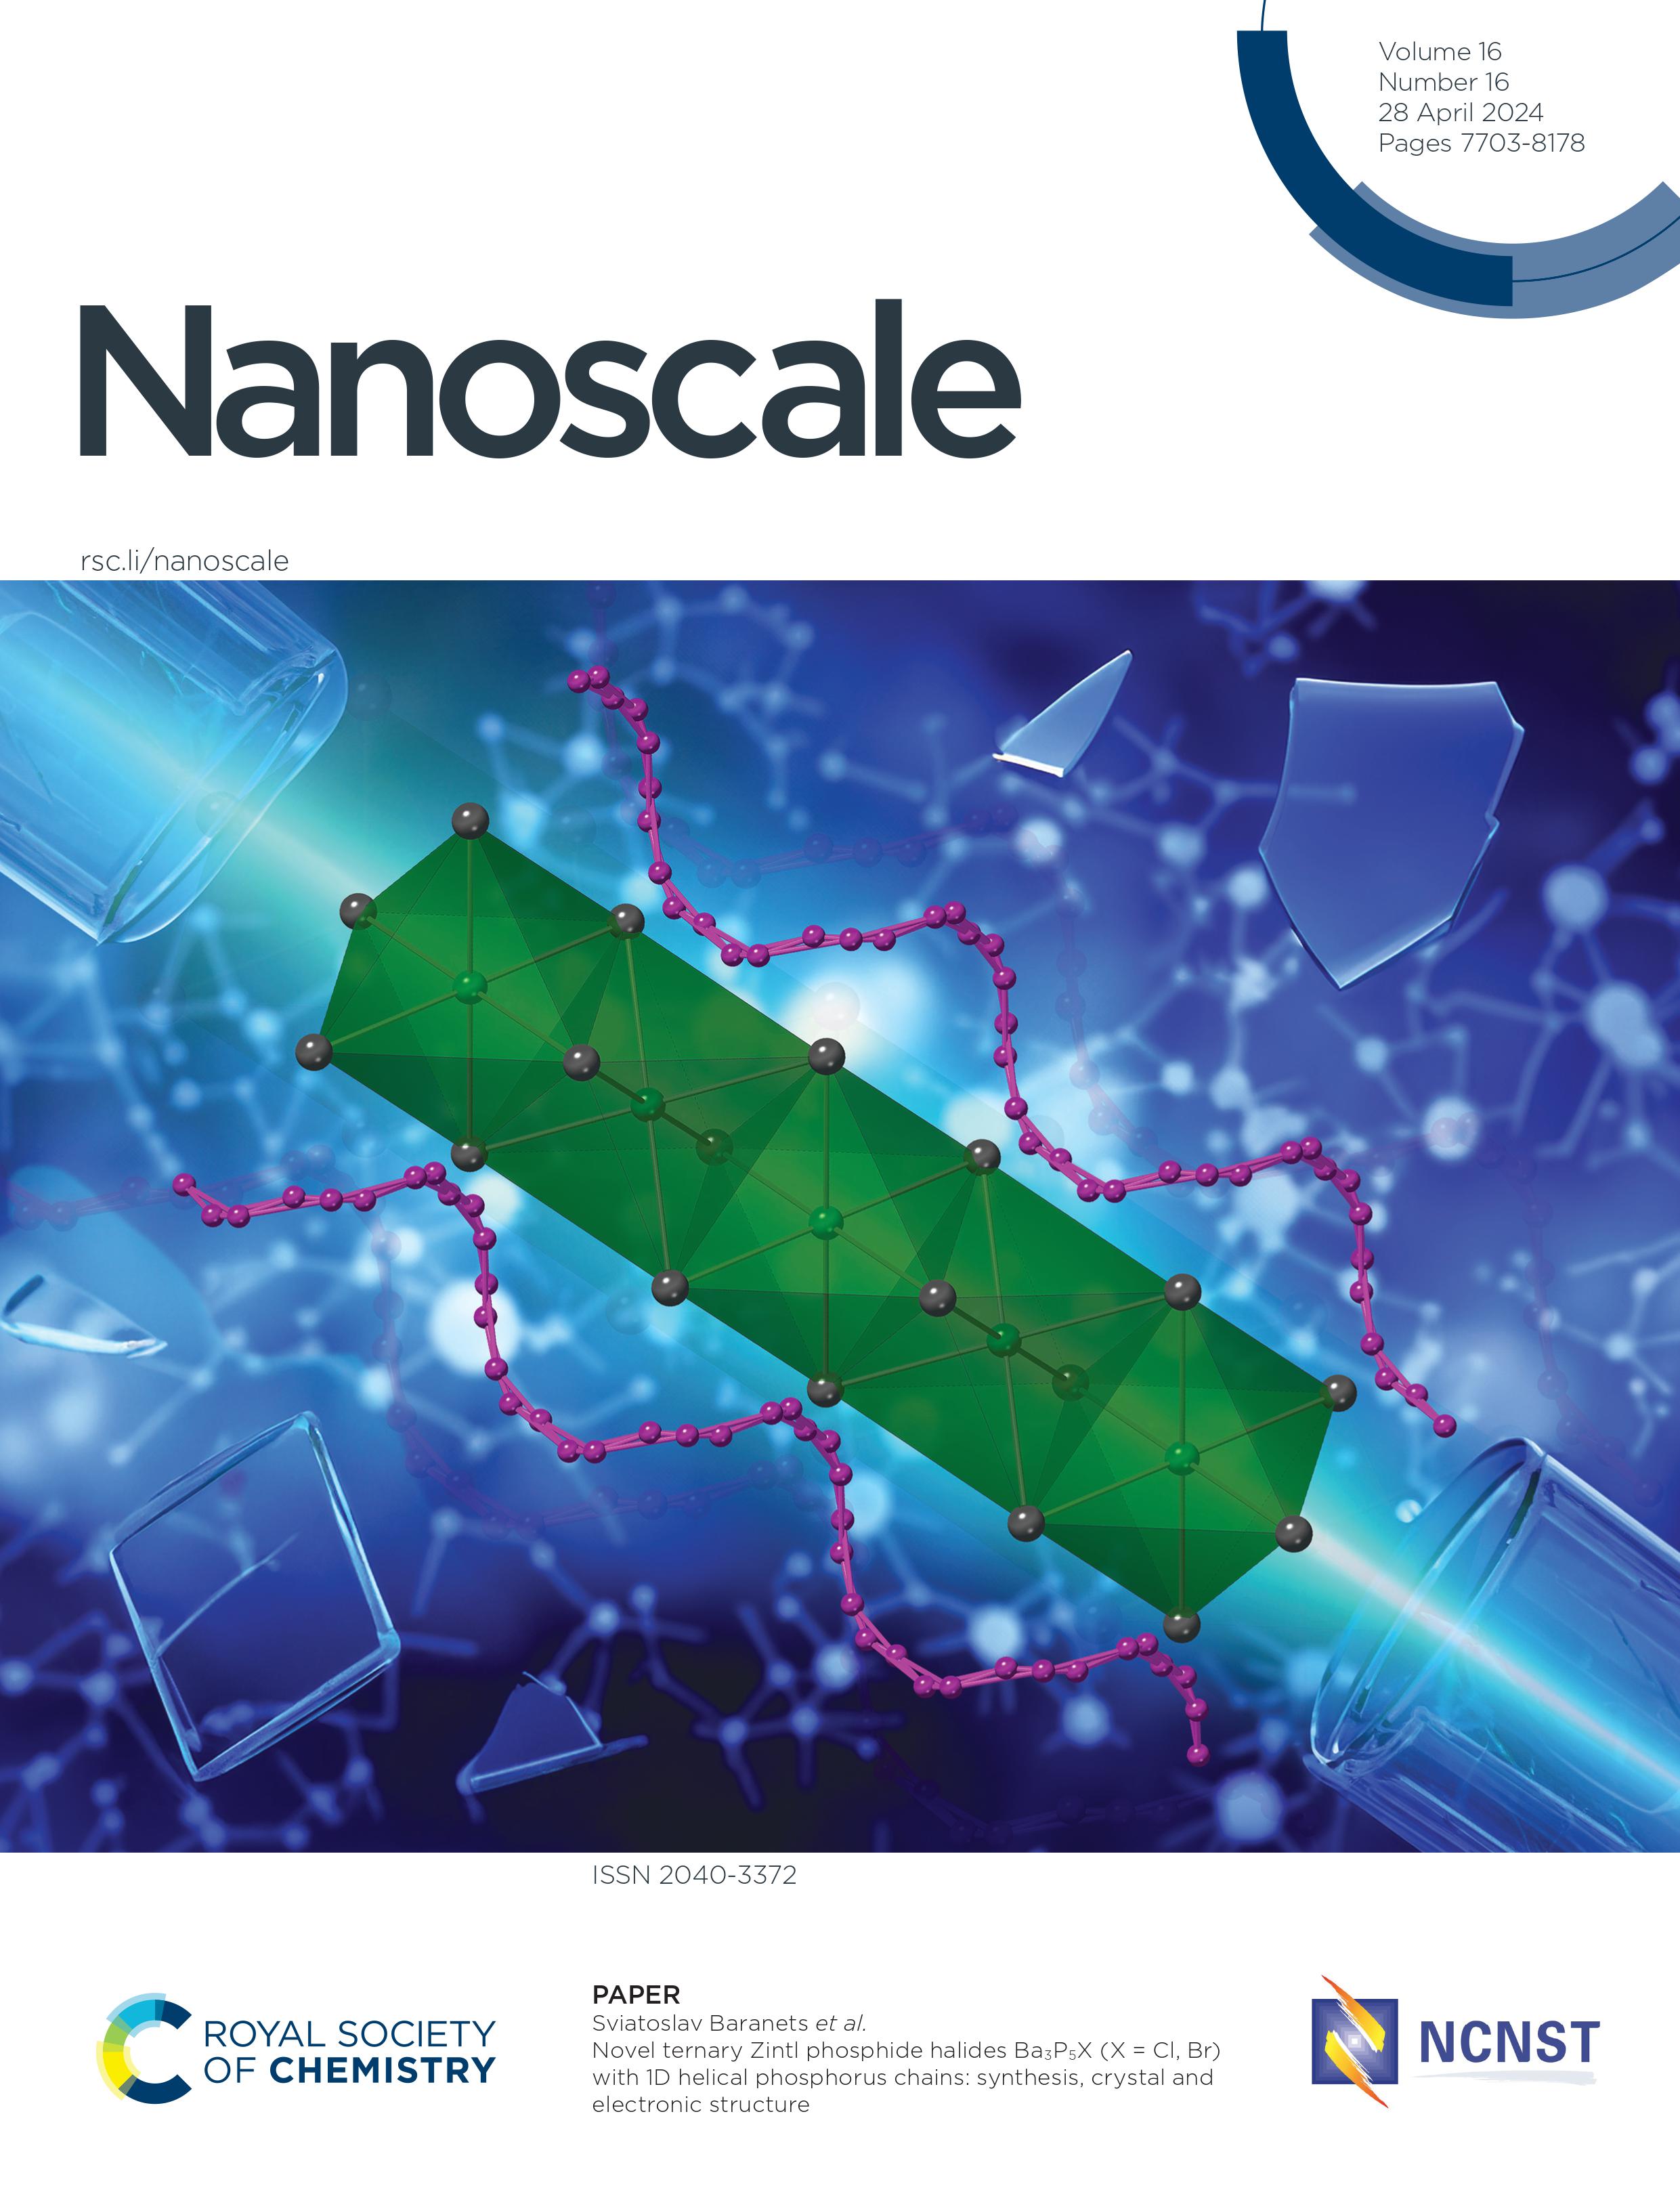 Cover art on Journal Nanoscale